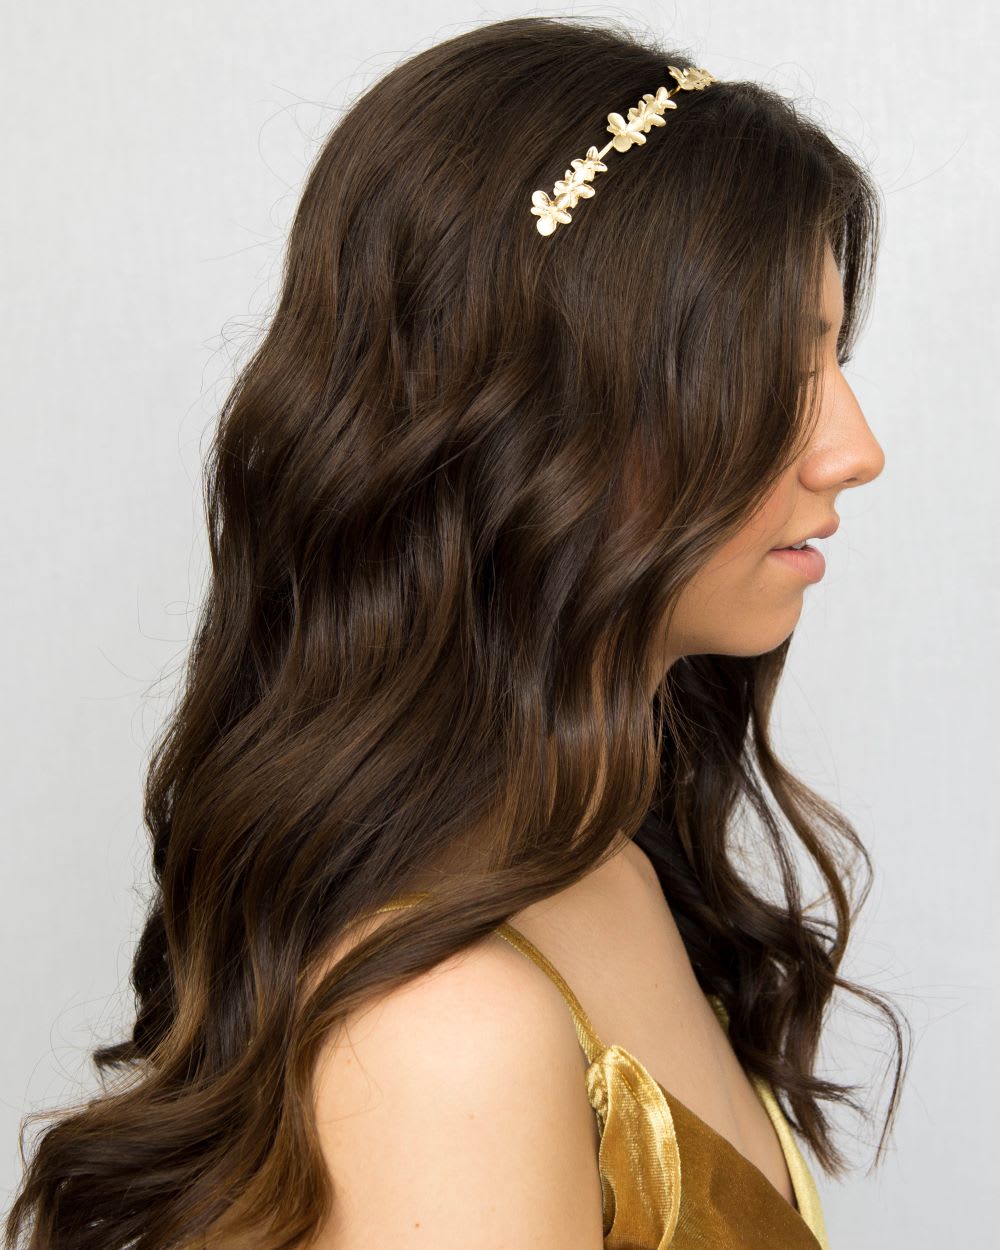 How to Style Wedding Hair with a Headband | Headbands of Hope